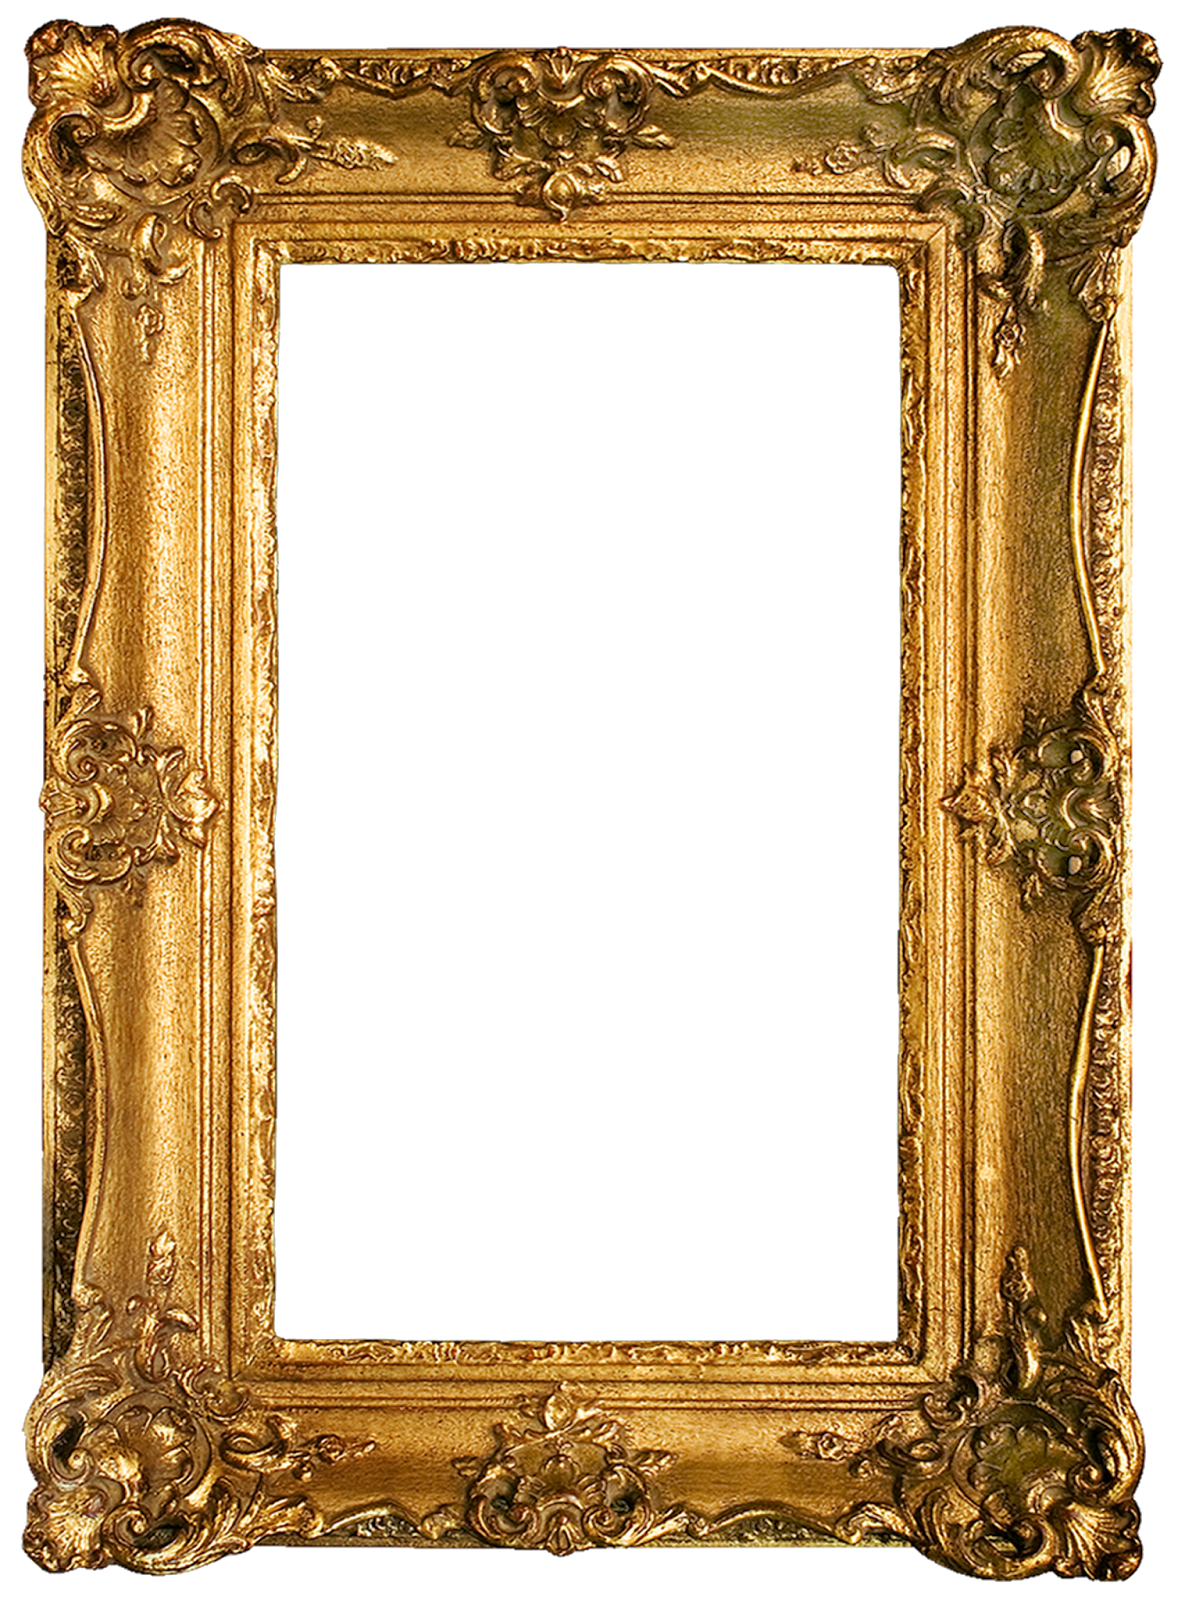 Download PNG image - Mirror Gold Frame PNG Image 